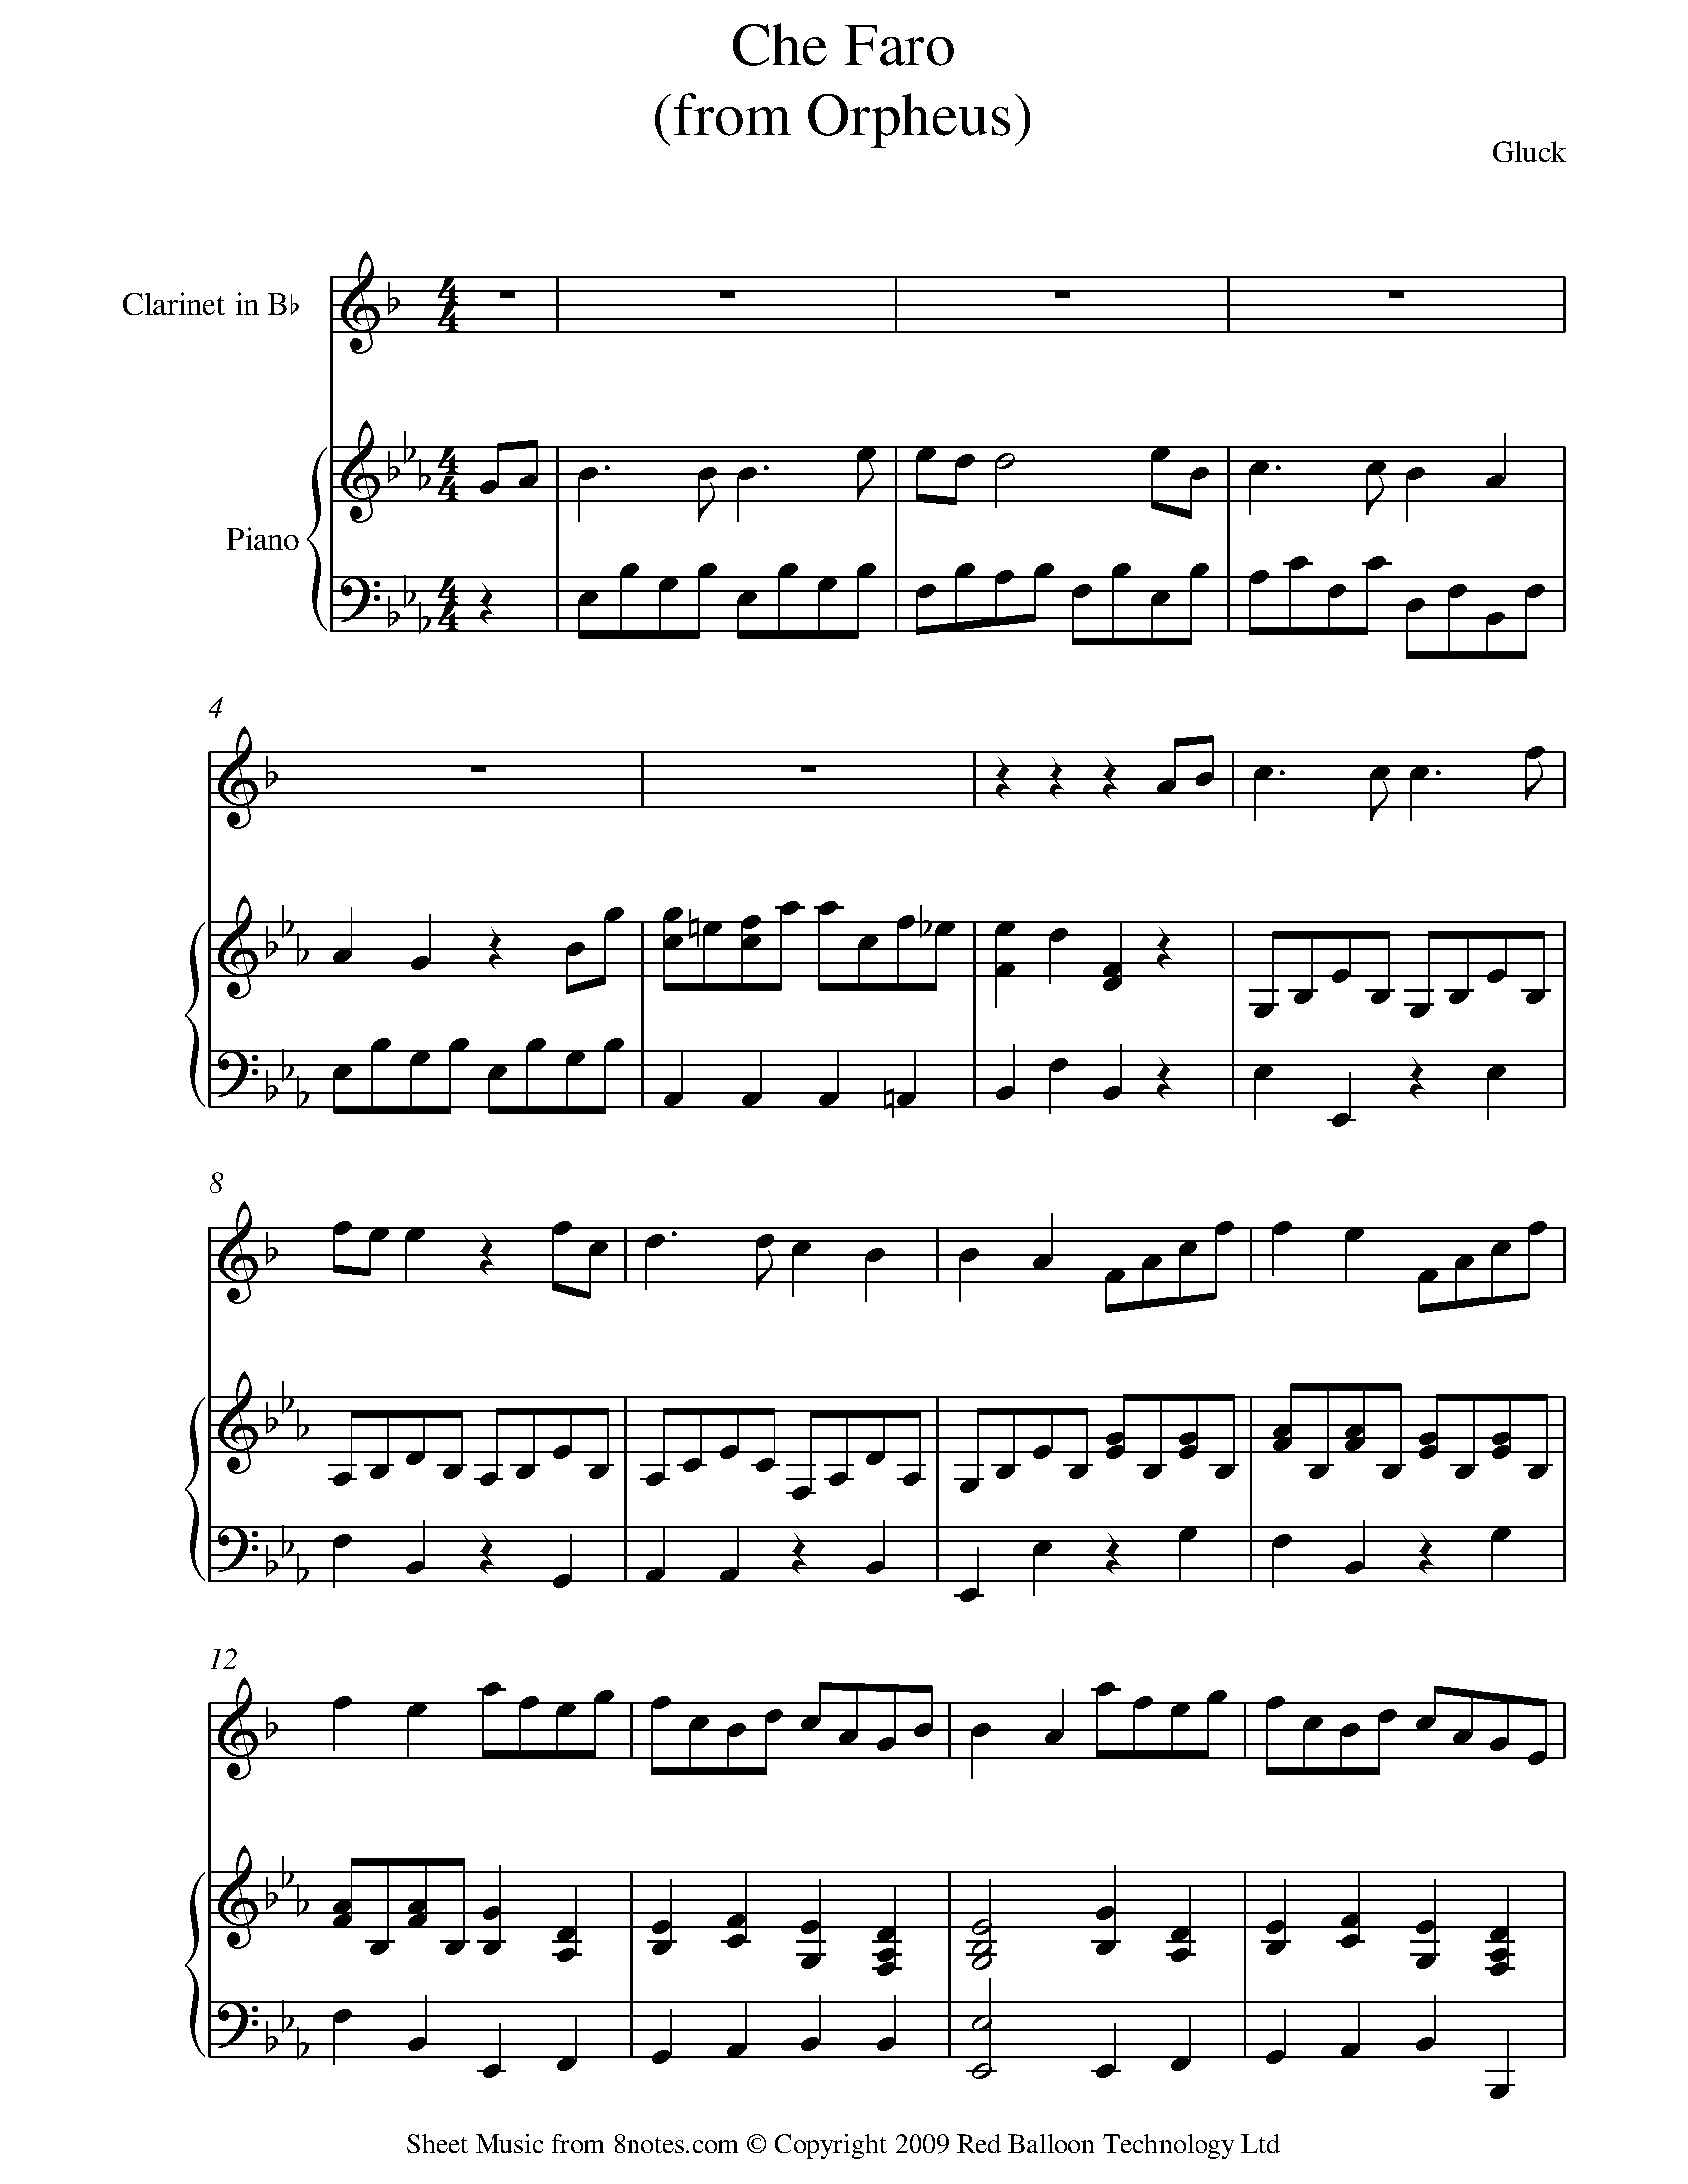 servir Mono Inclinado Gluck - Che faro senza Euridice from Orfeo Sheet music for Clarinet -  8notes.com